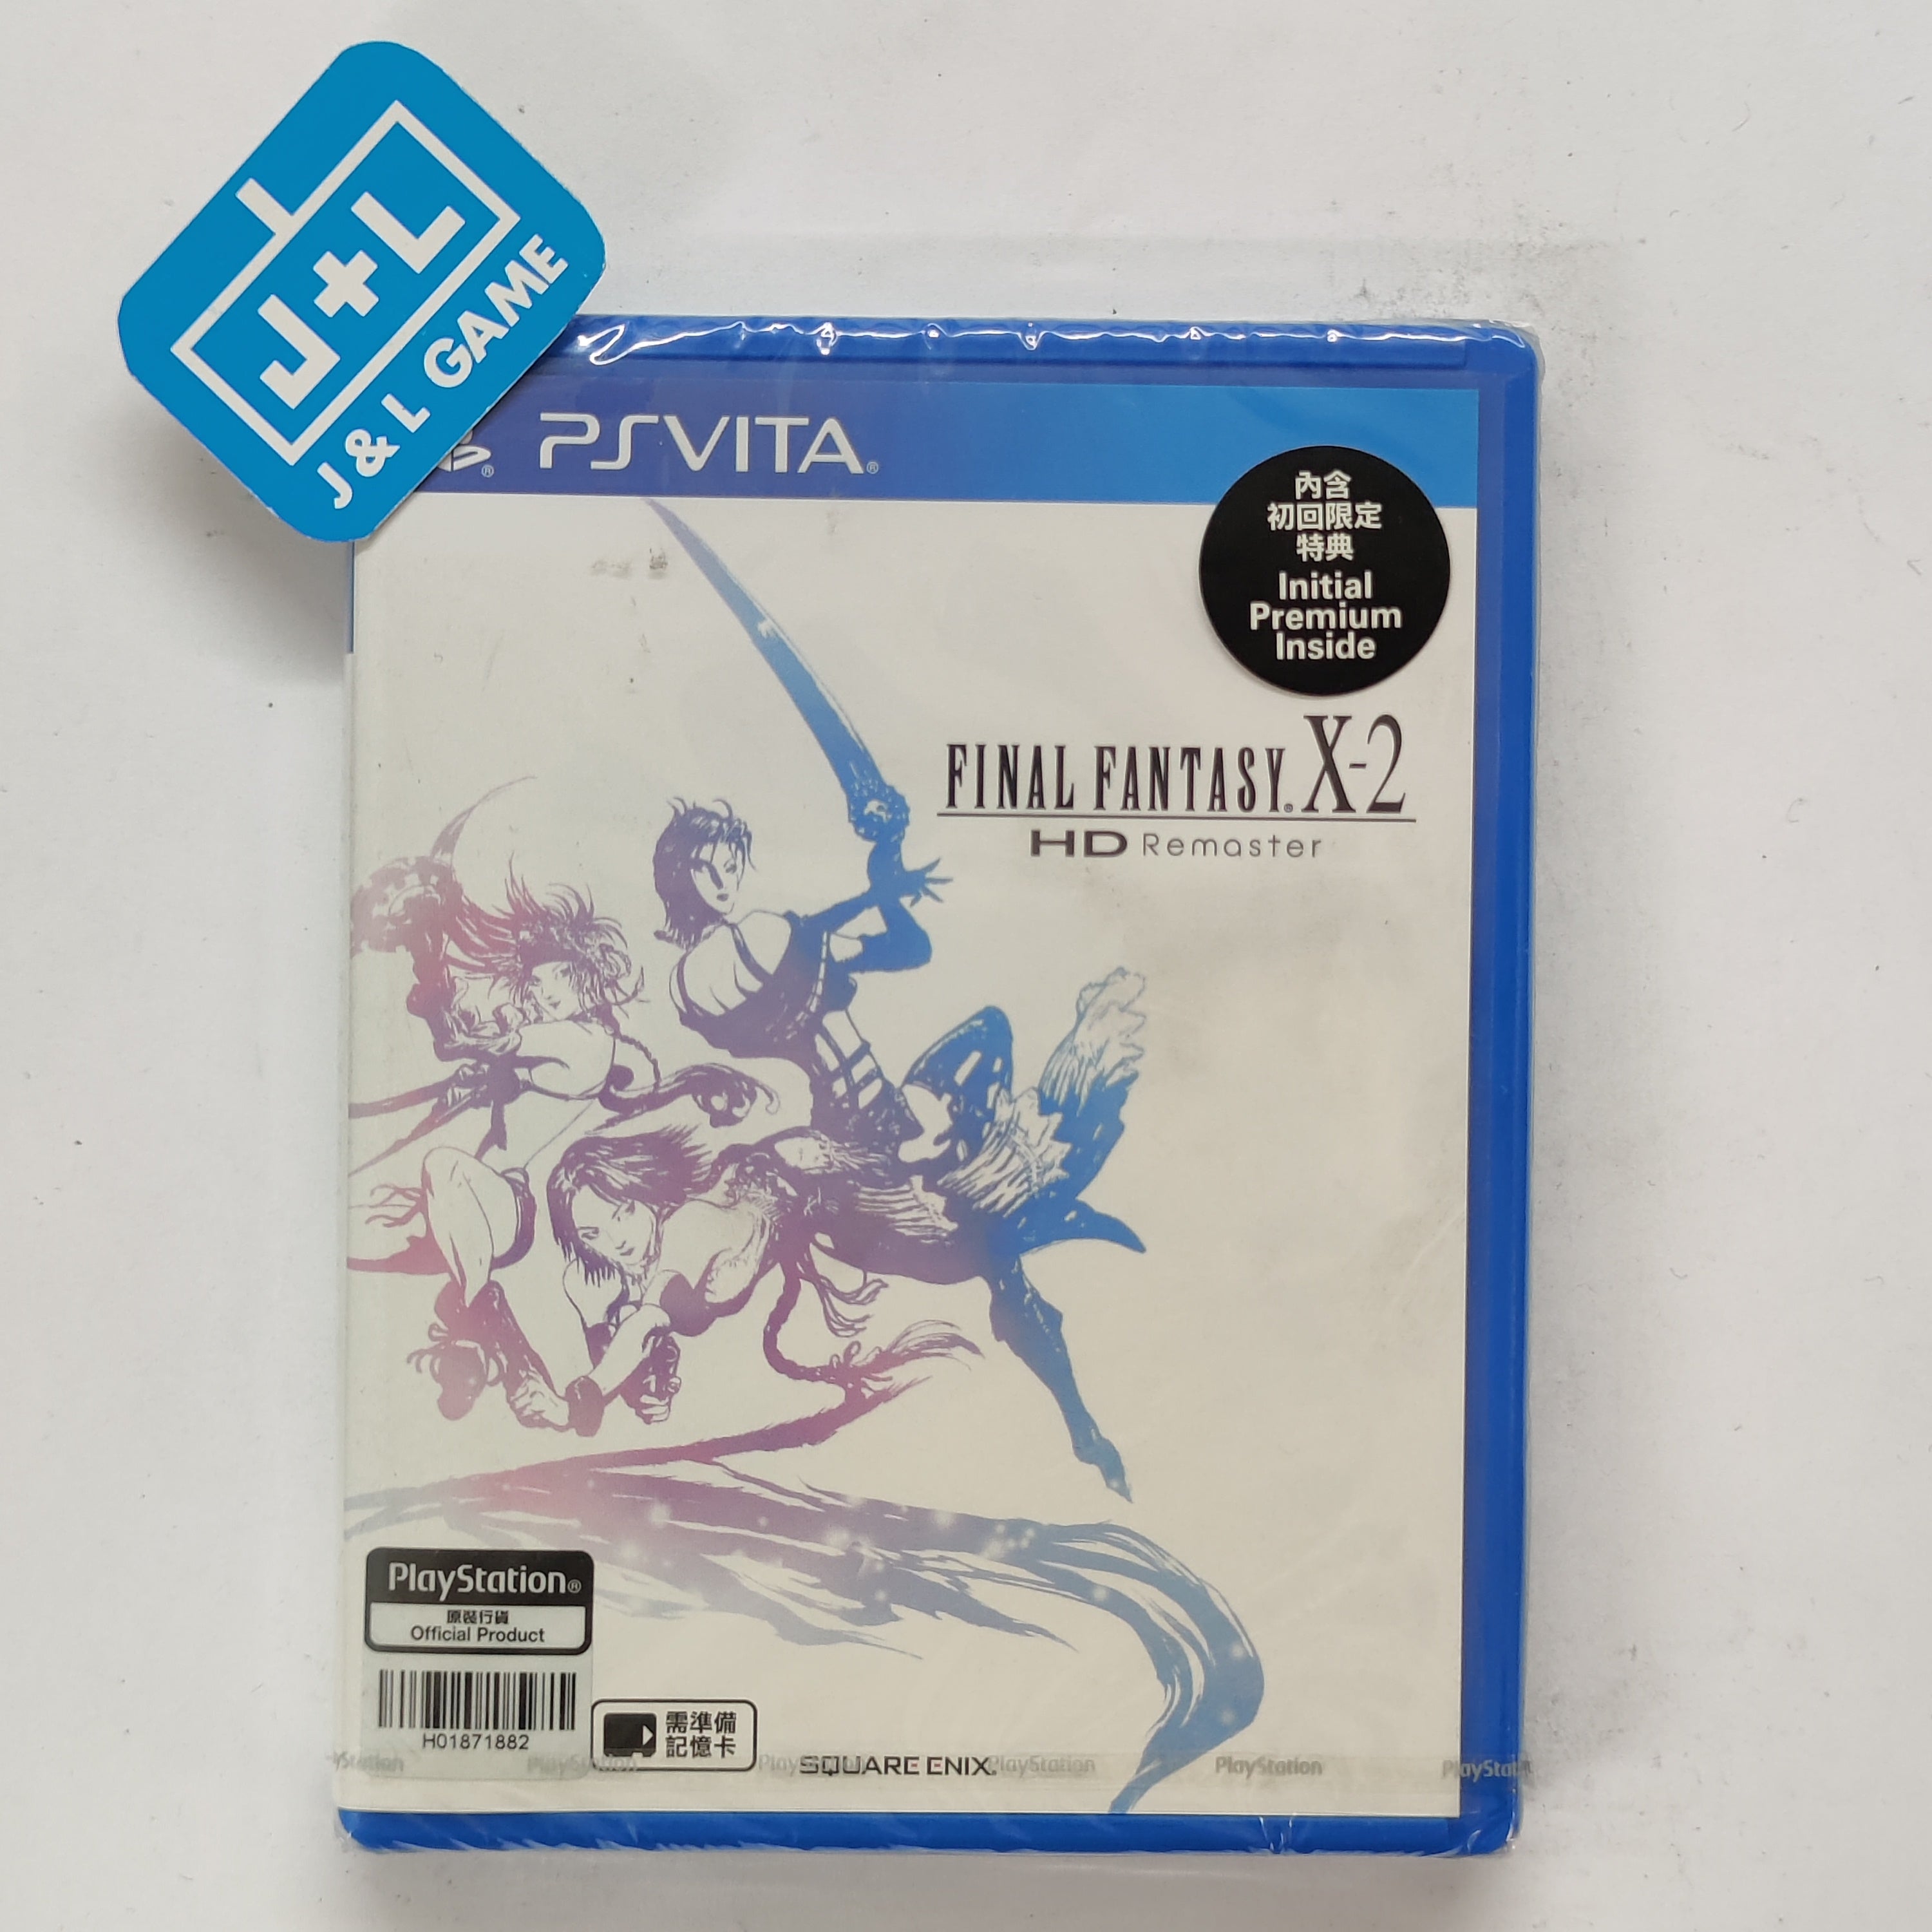 Final Fantasy X-2 HD Remaster (Japanese Sub) - (PSV) PlayStation Vita (Japanese Import) Video Games Sony   